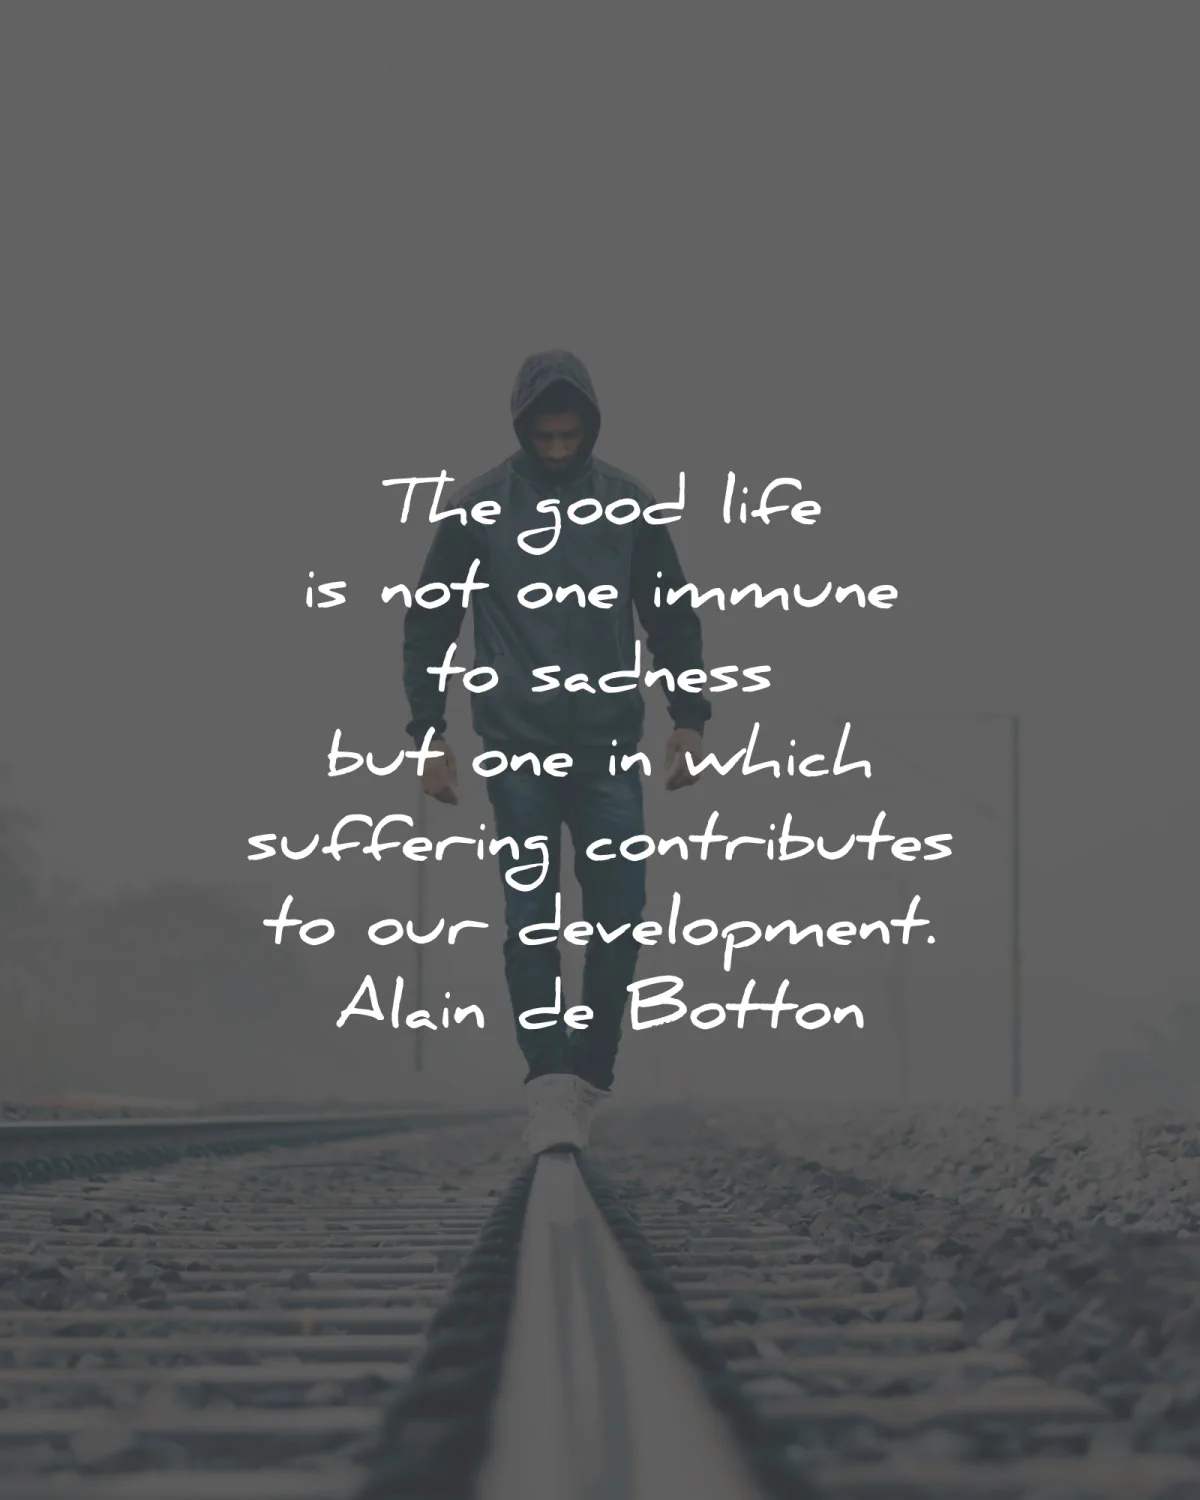 sad quotes good life immune sadness development alain botton wisdom